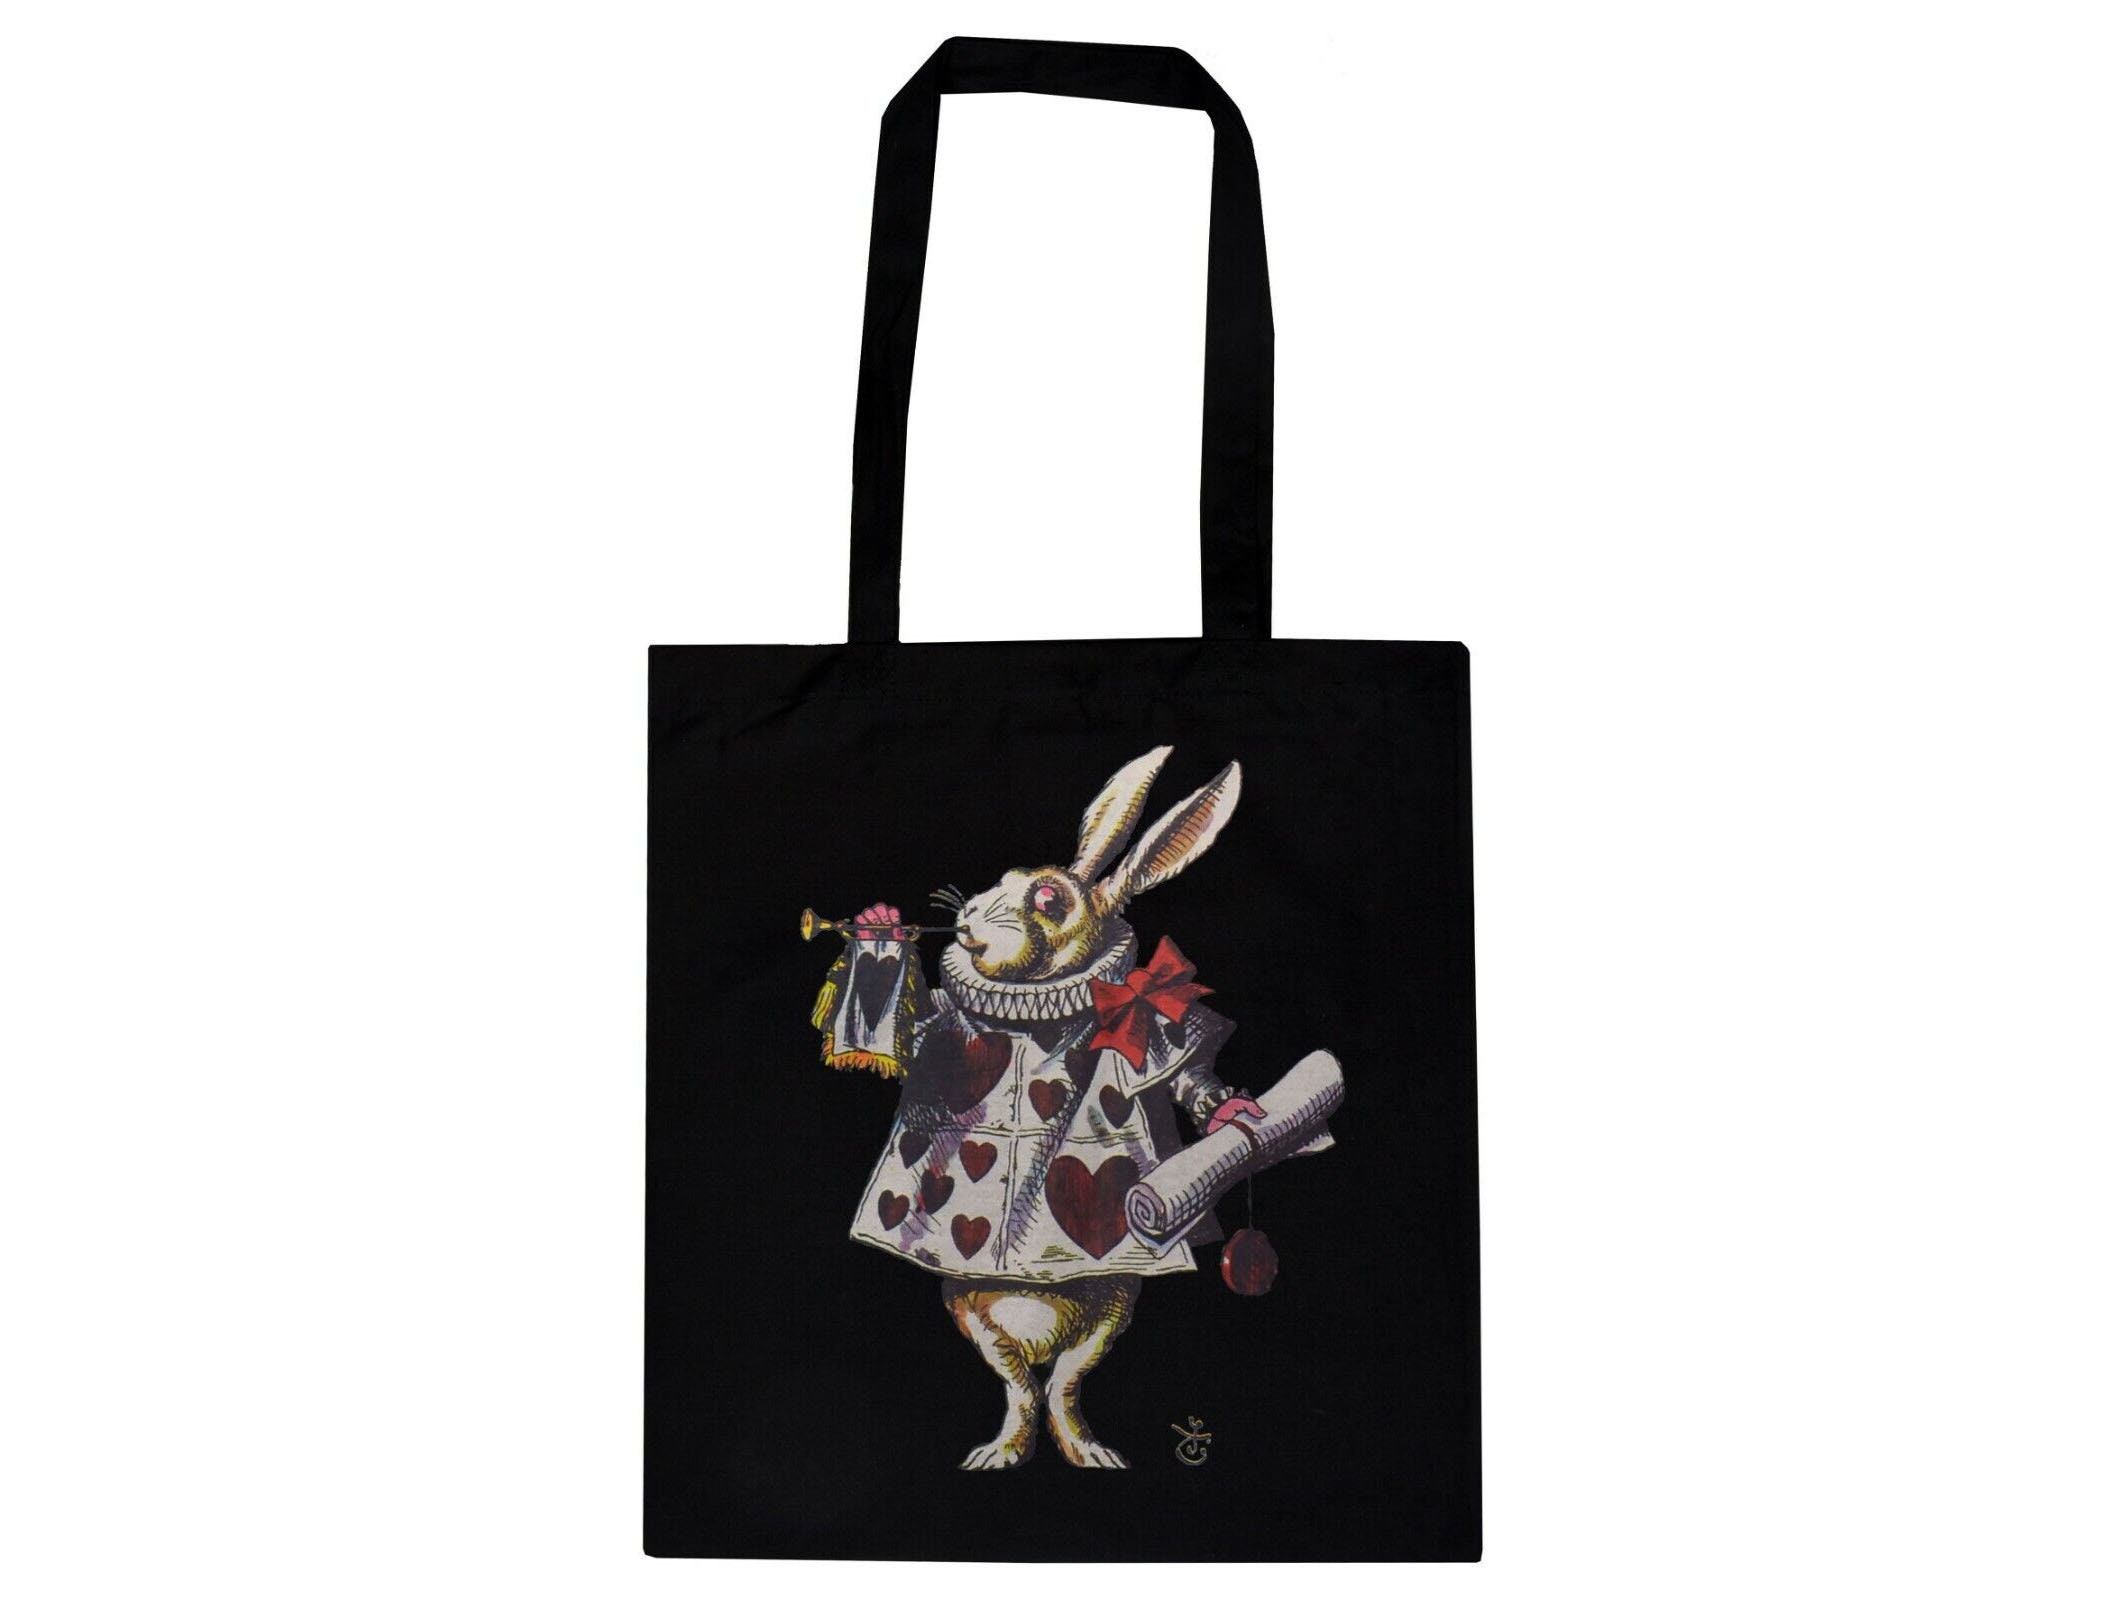 Alice in Wonderland Camouflage Tote Bag – A Whole Lotta Jesus